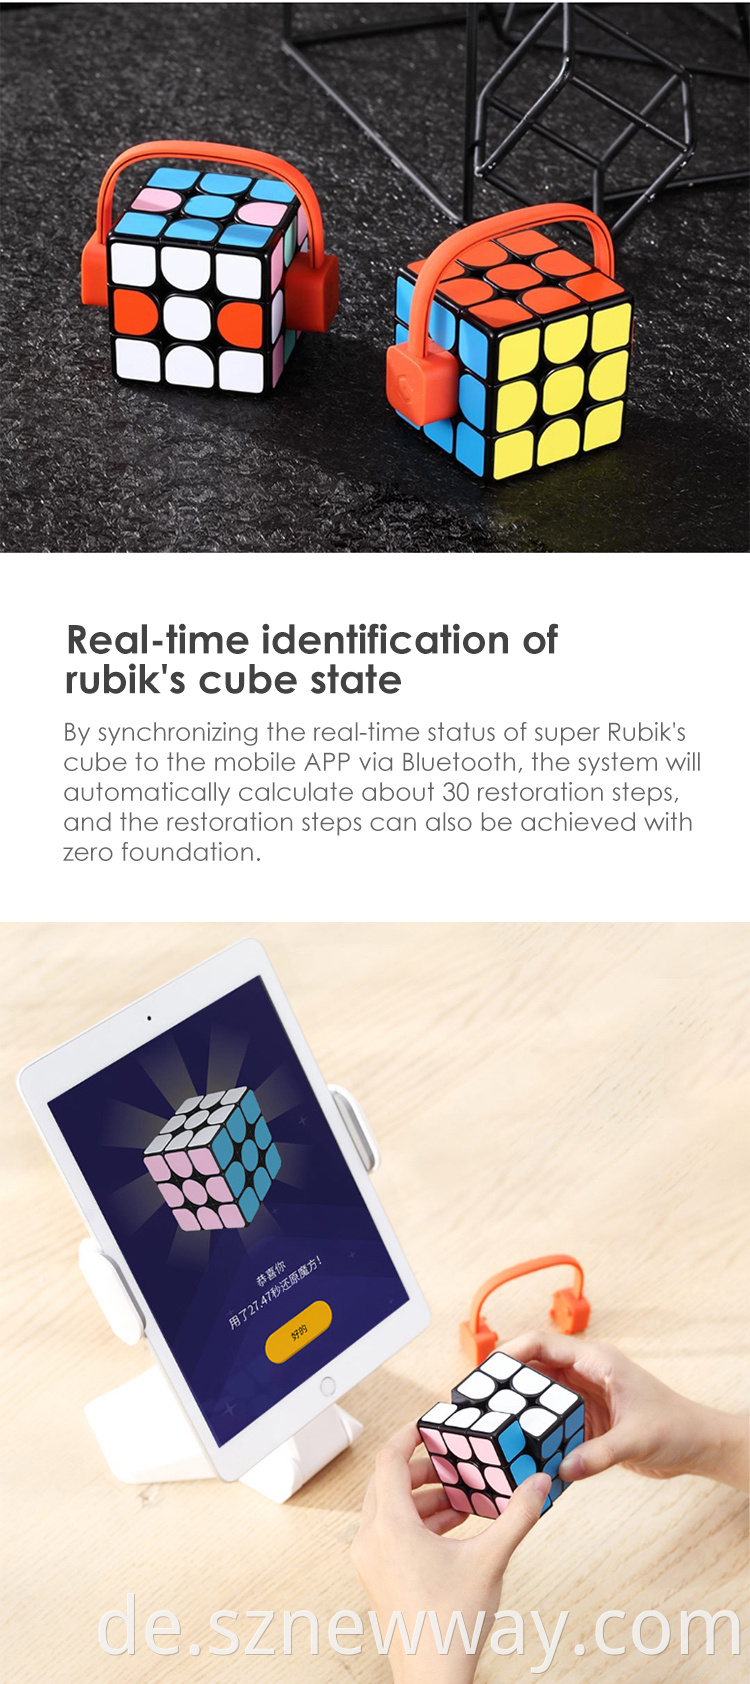 Giiker Super Cube I3